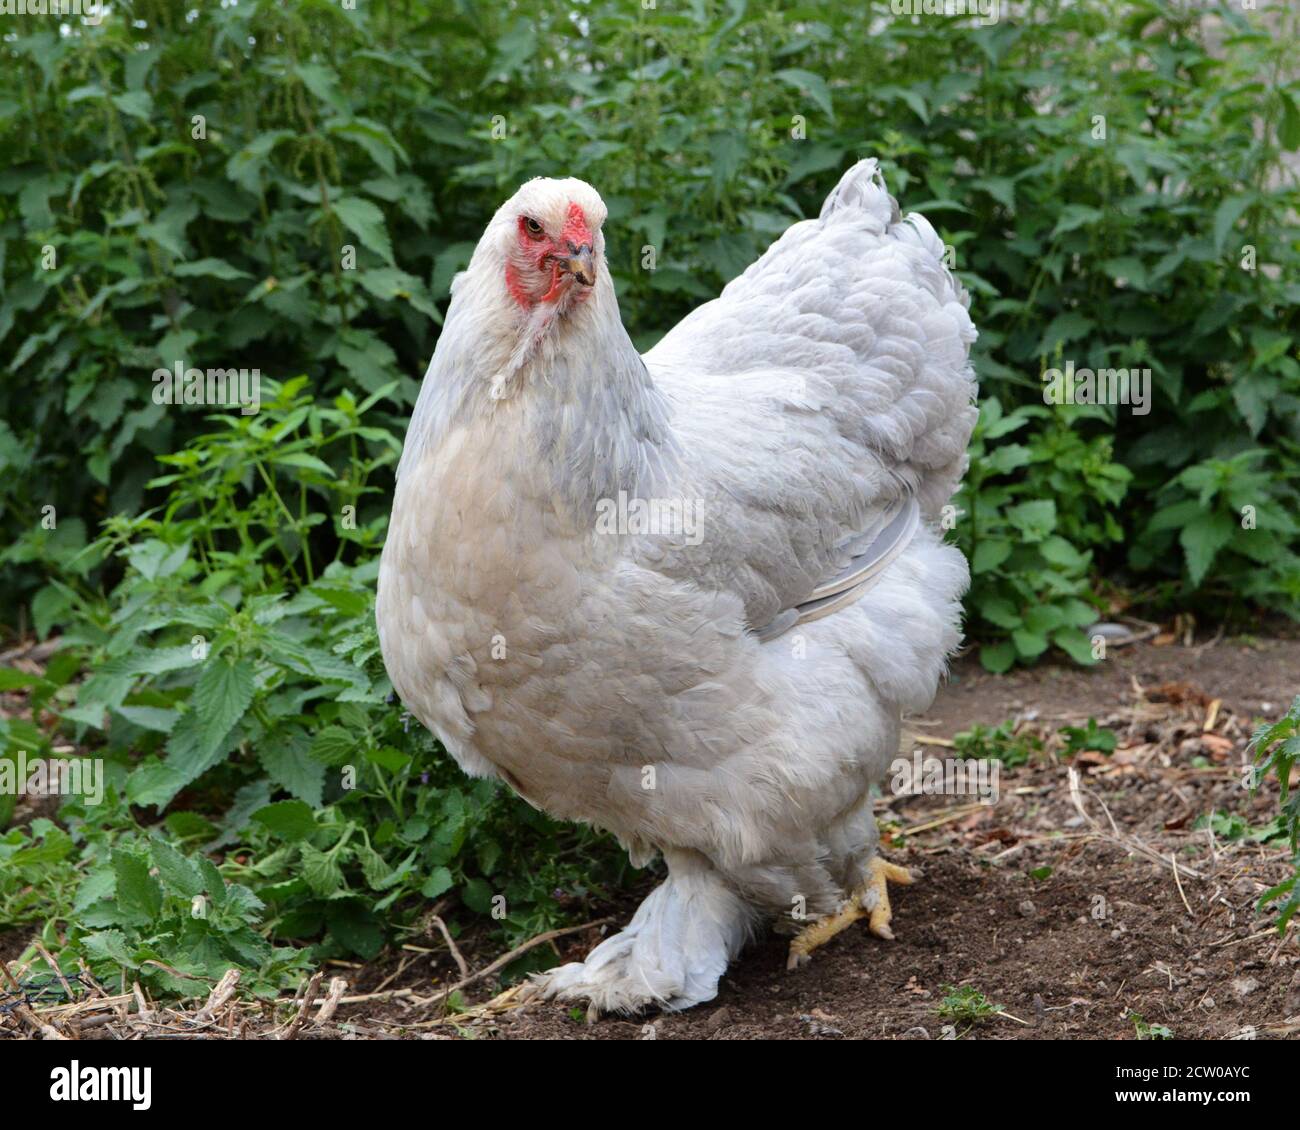 c8./comp/2CW0AYC/beautiful-brahma-chicken